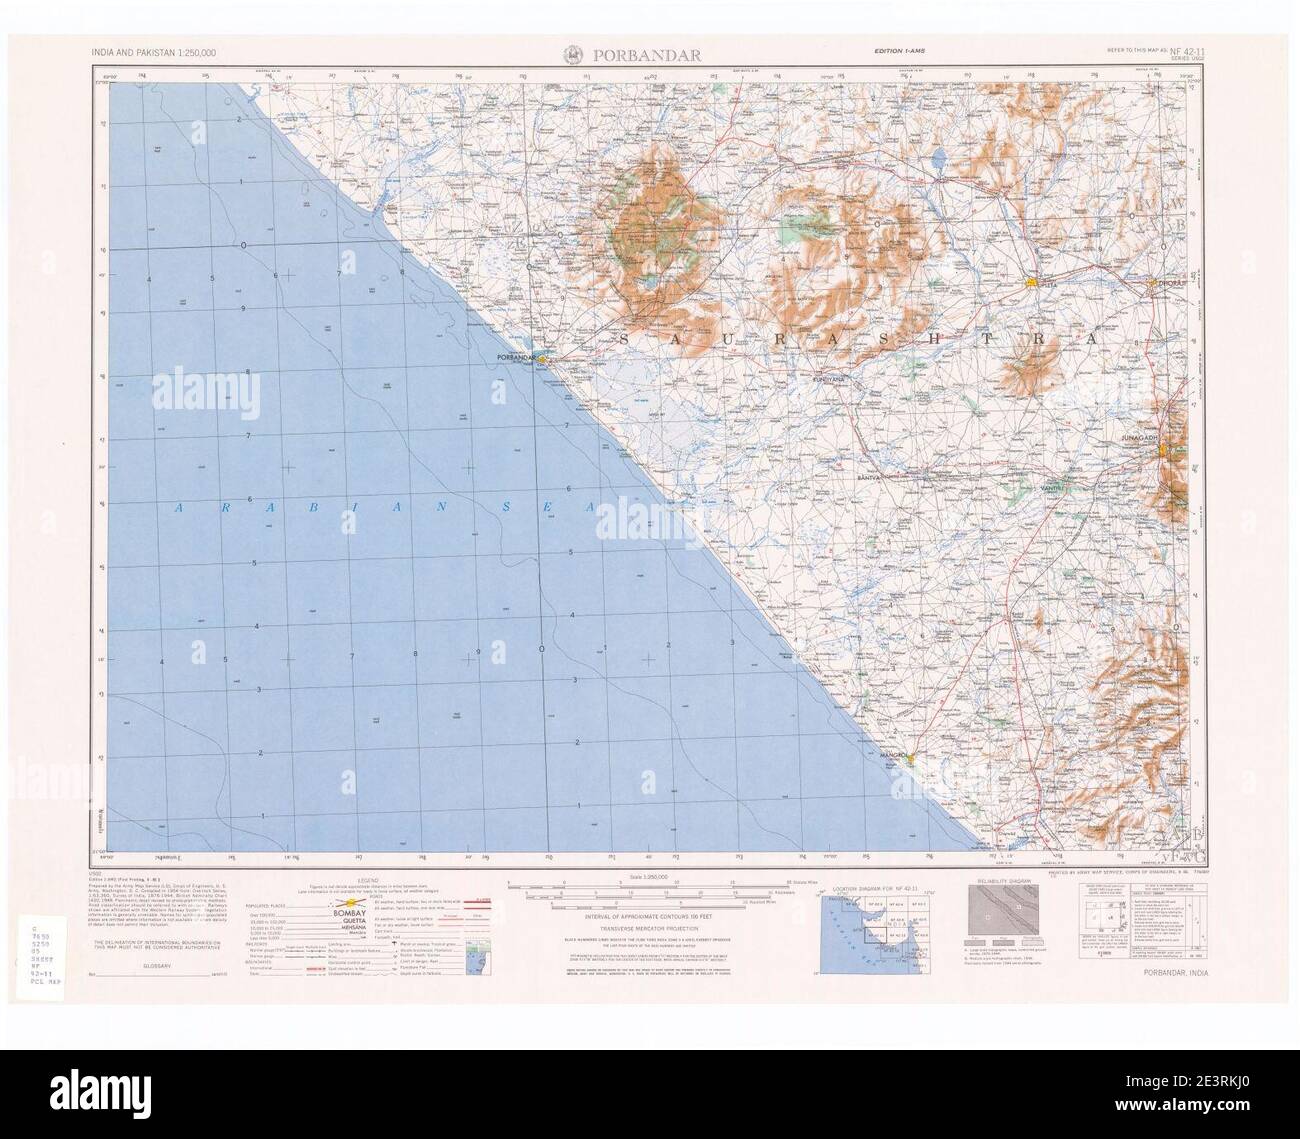 Mappa India e Pakistan 1-250,000 Tile NF 42-11 Porbandar. Foto Stock